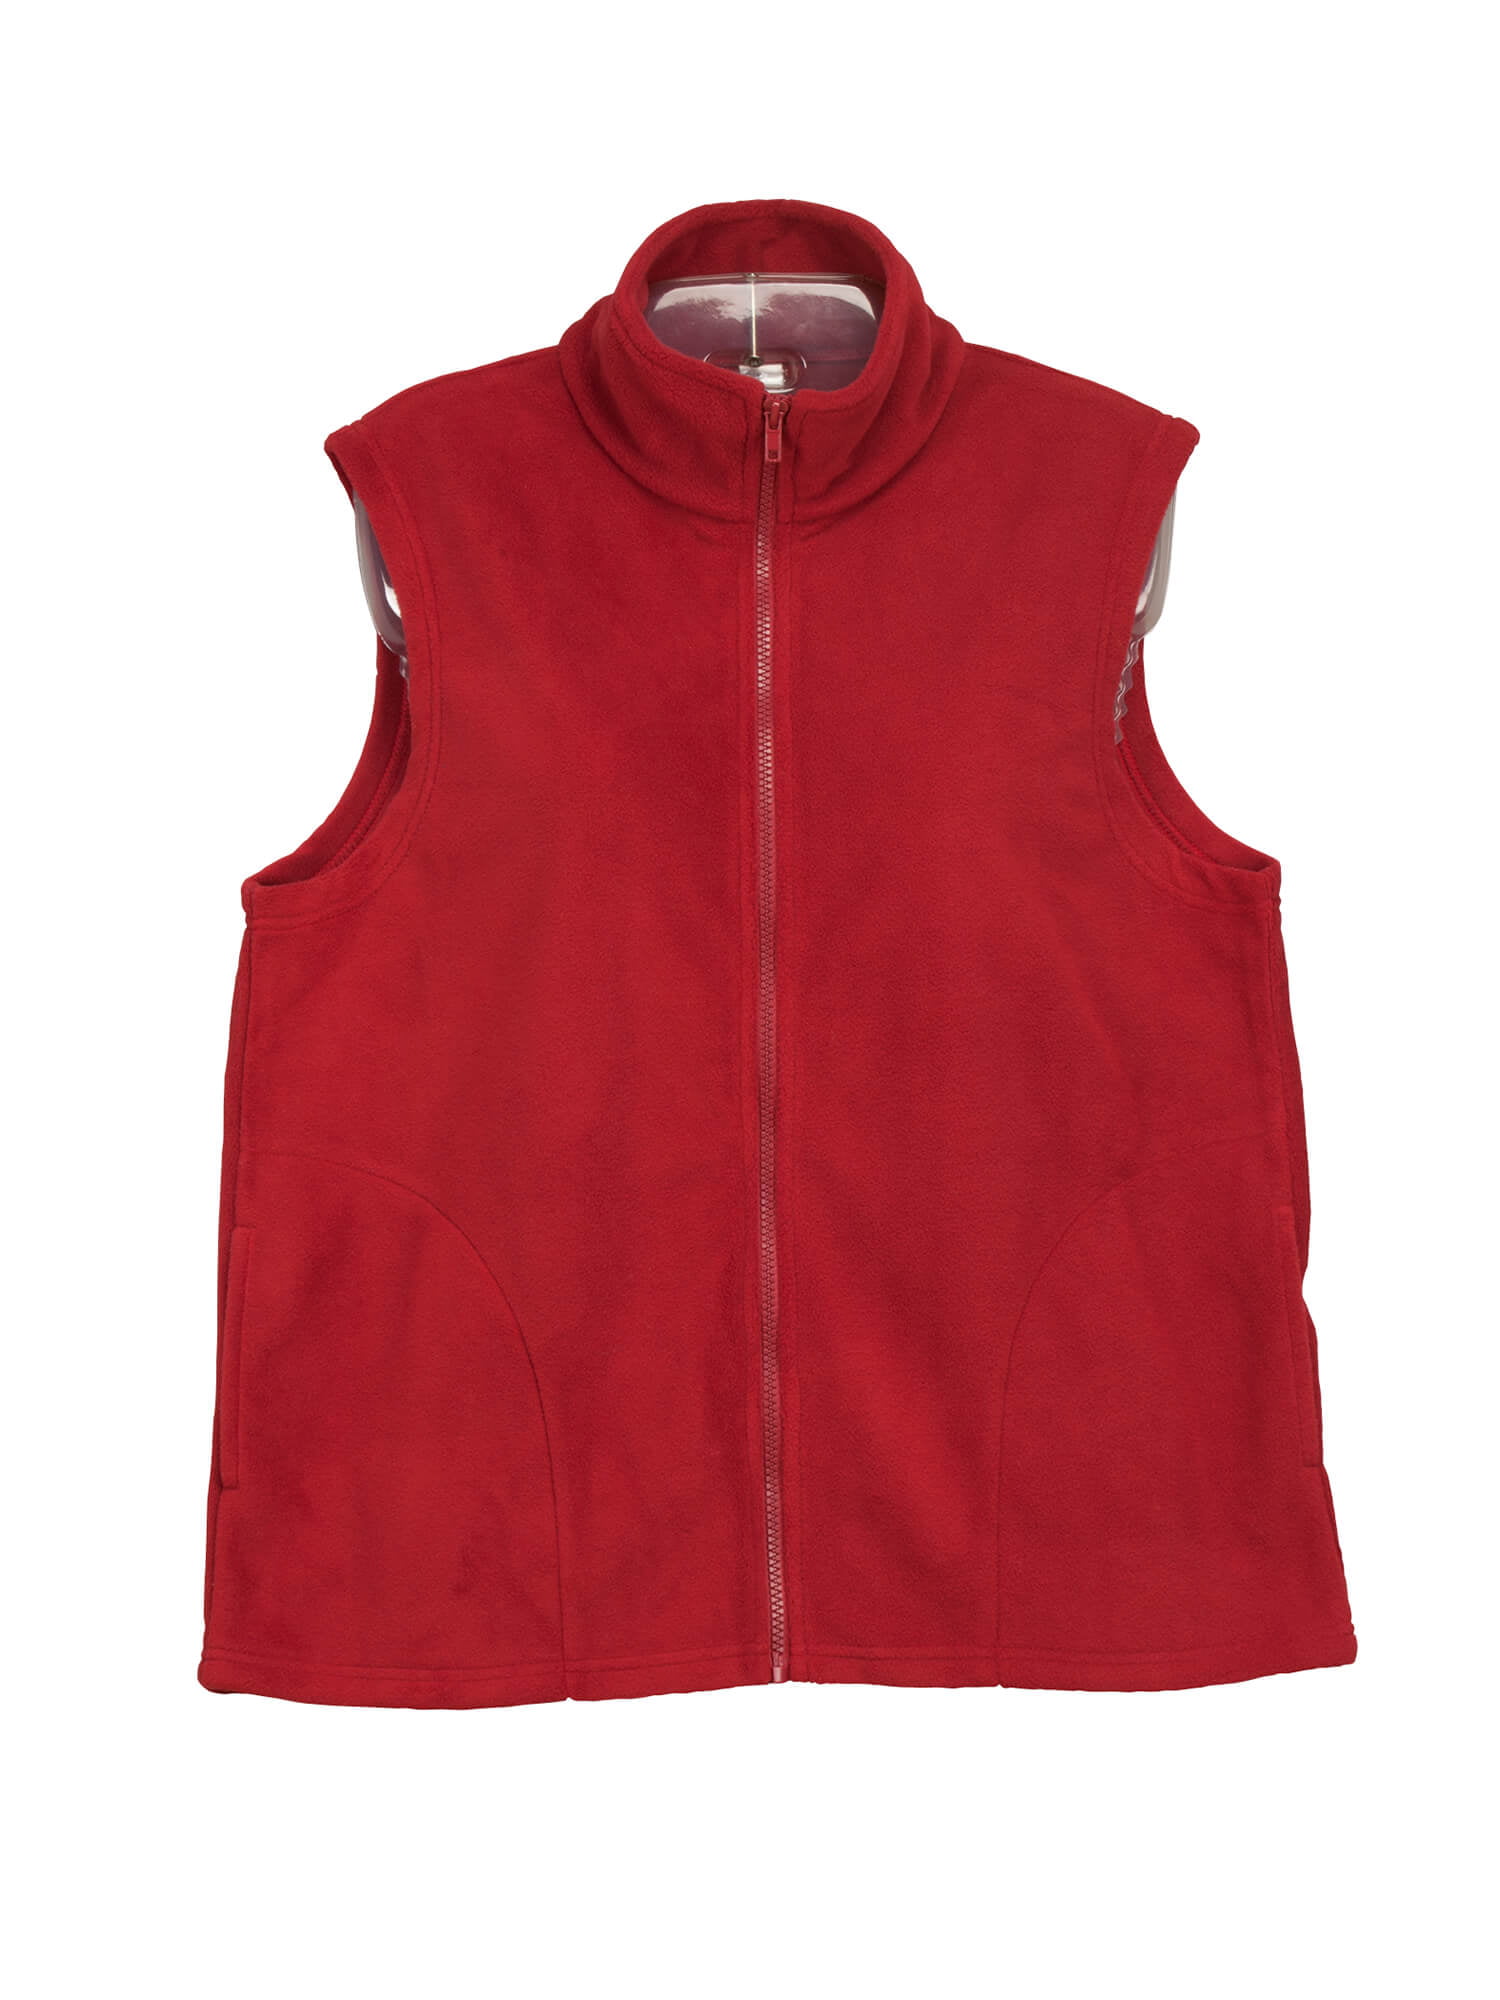 Mens Outdoor Warm Fleece Vest Lightweight Mountain Sleeveless Jacket Coat Outerwear Red L